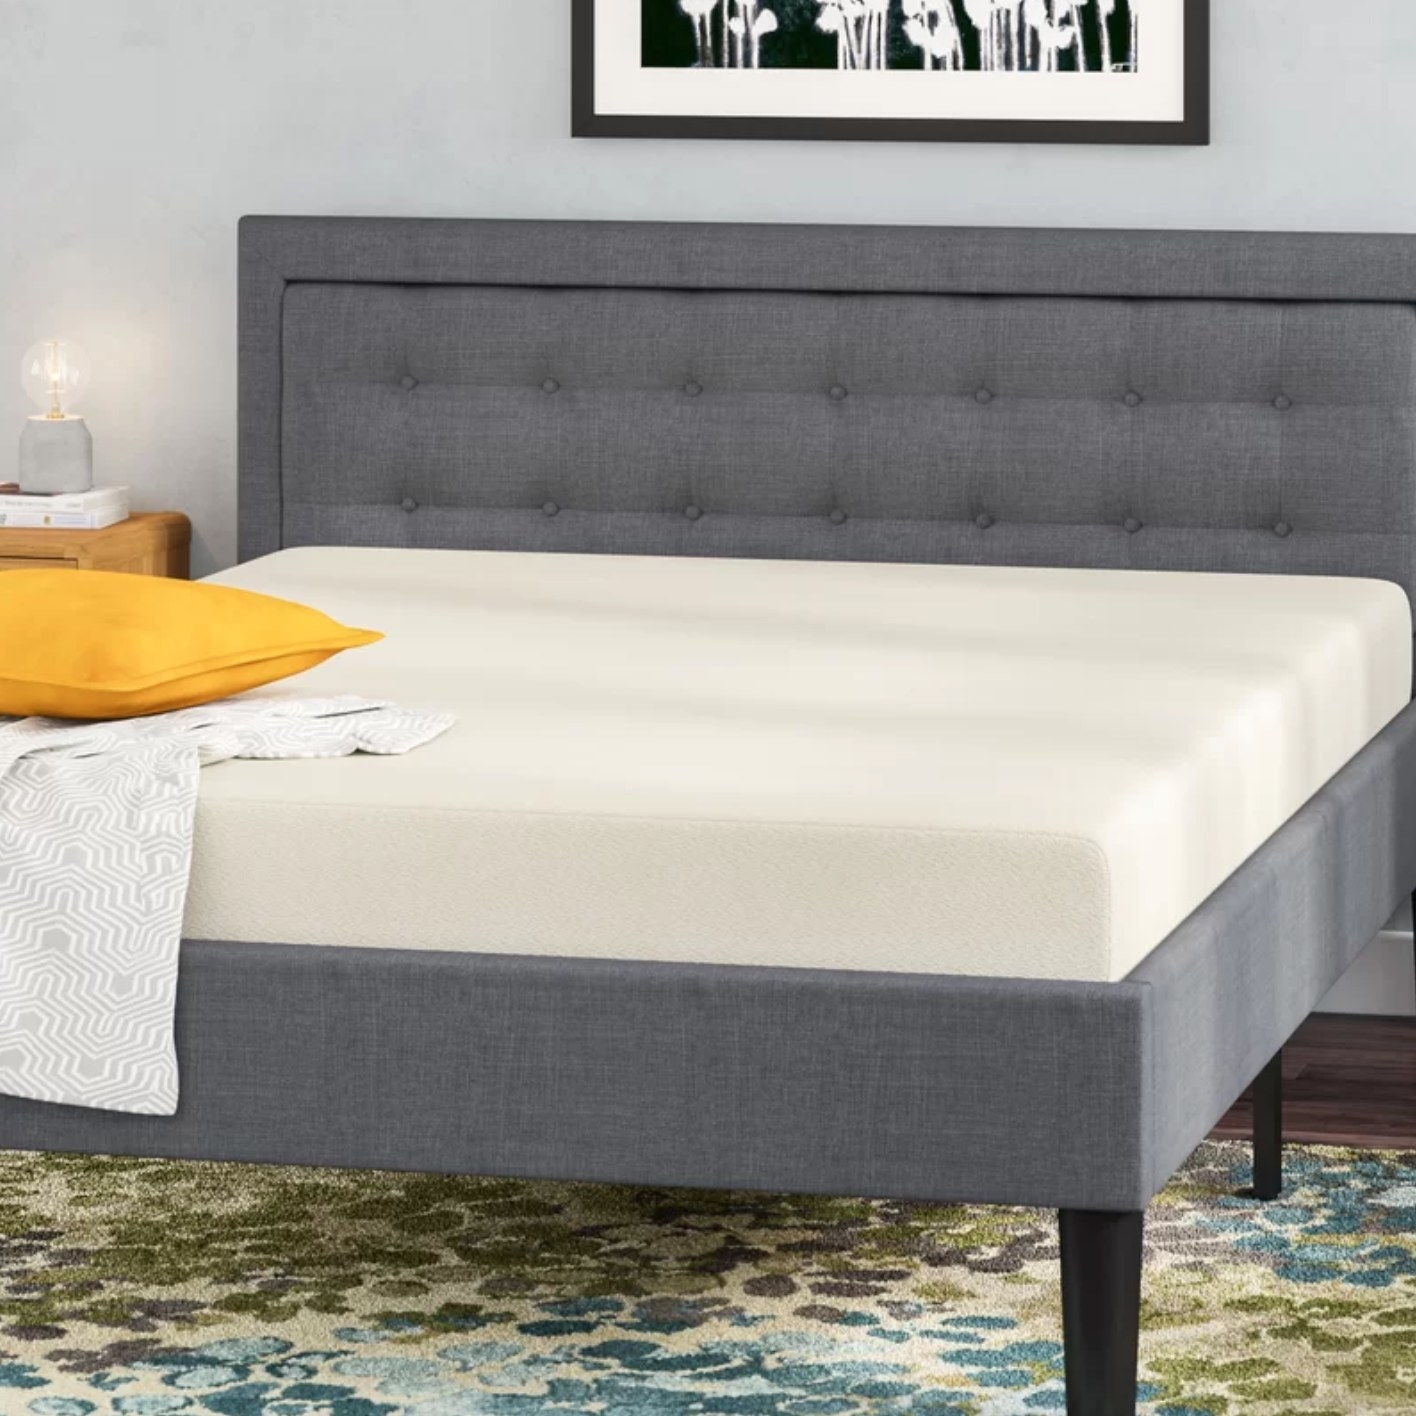 The eight-inch memory foam mattress